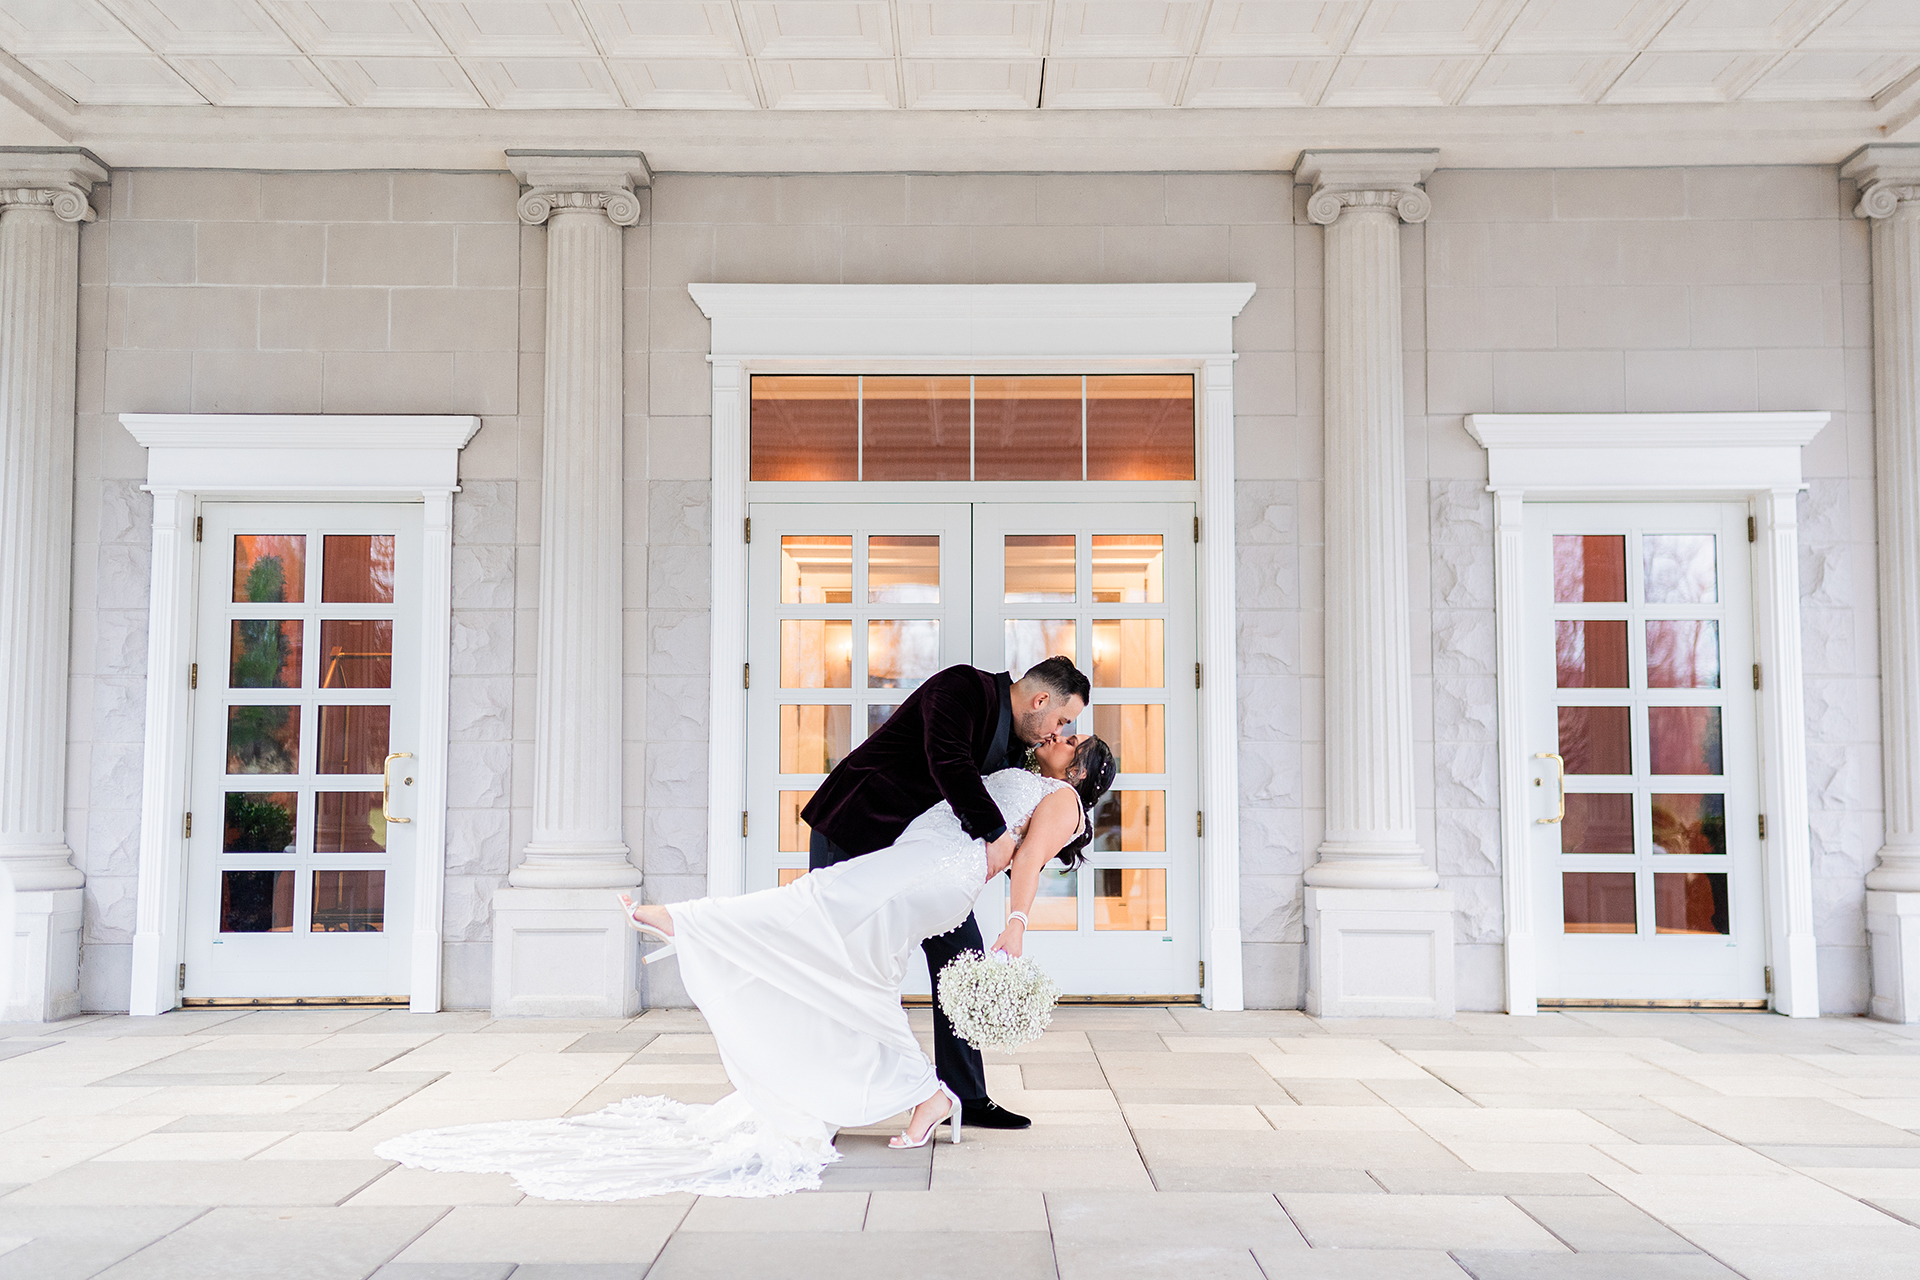 Best Brooklyn Wedding Photography in New York (NYC) | Artlook Inc